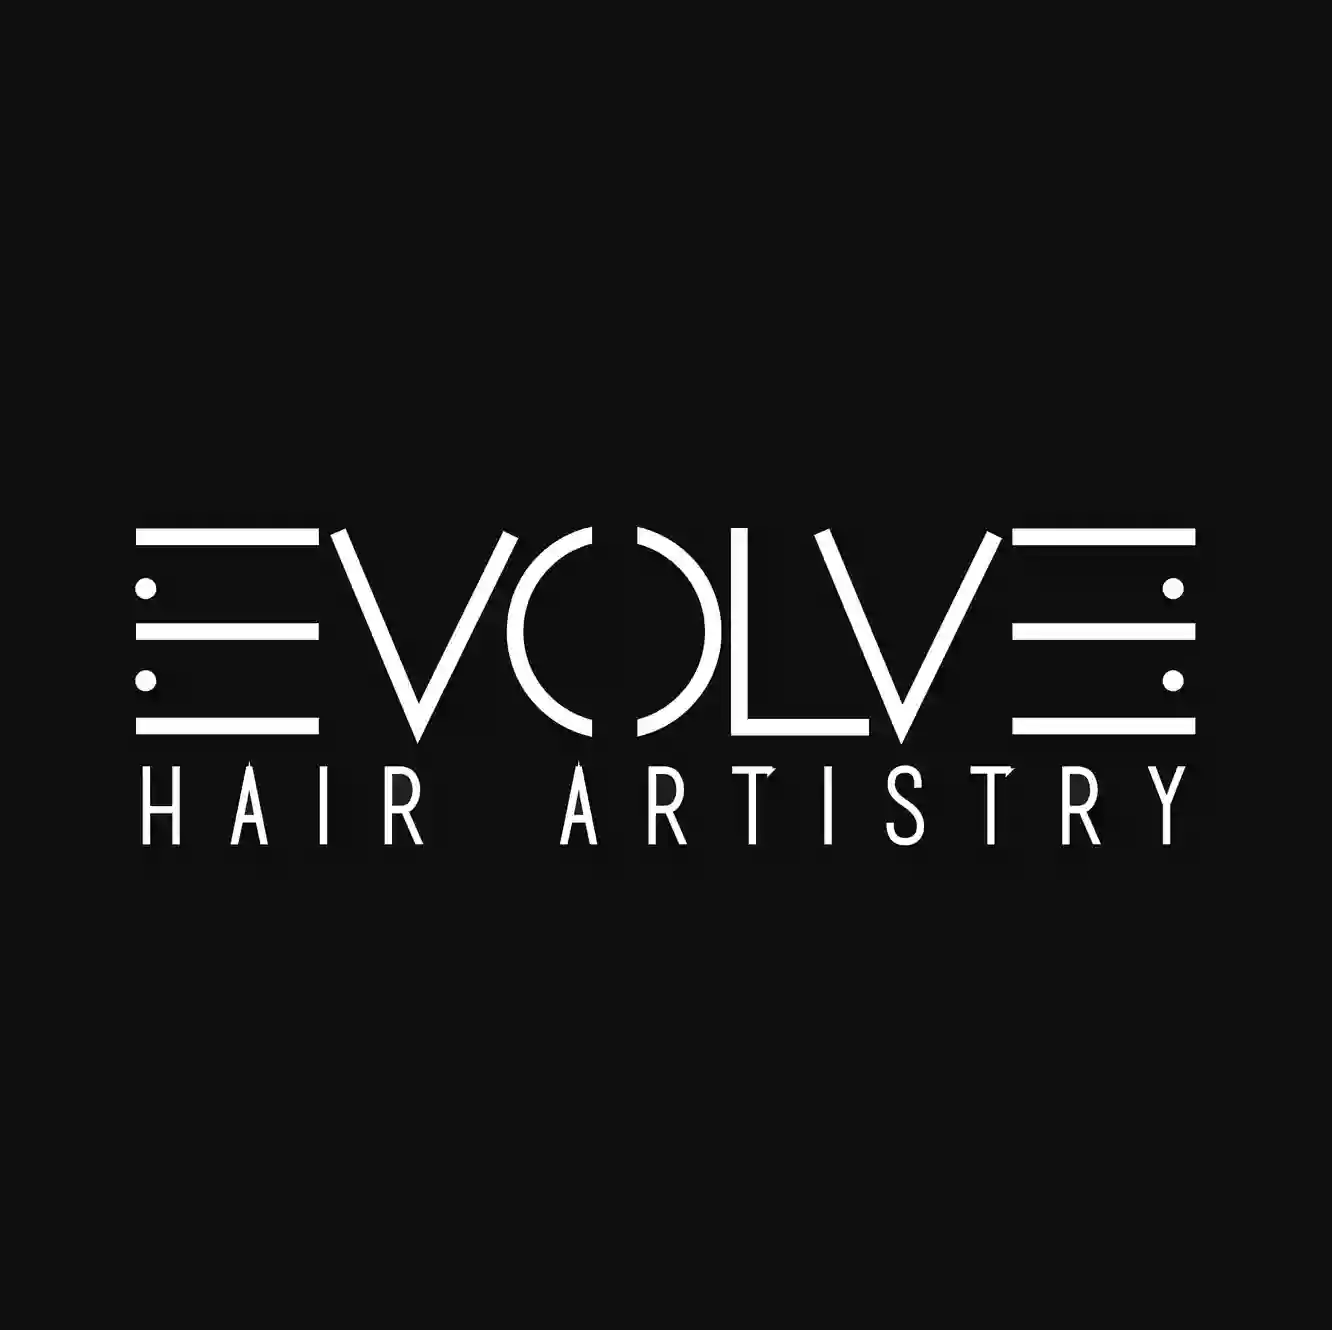 Evolve Hair Artistry